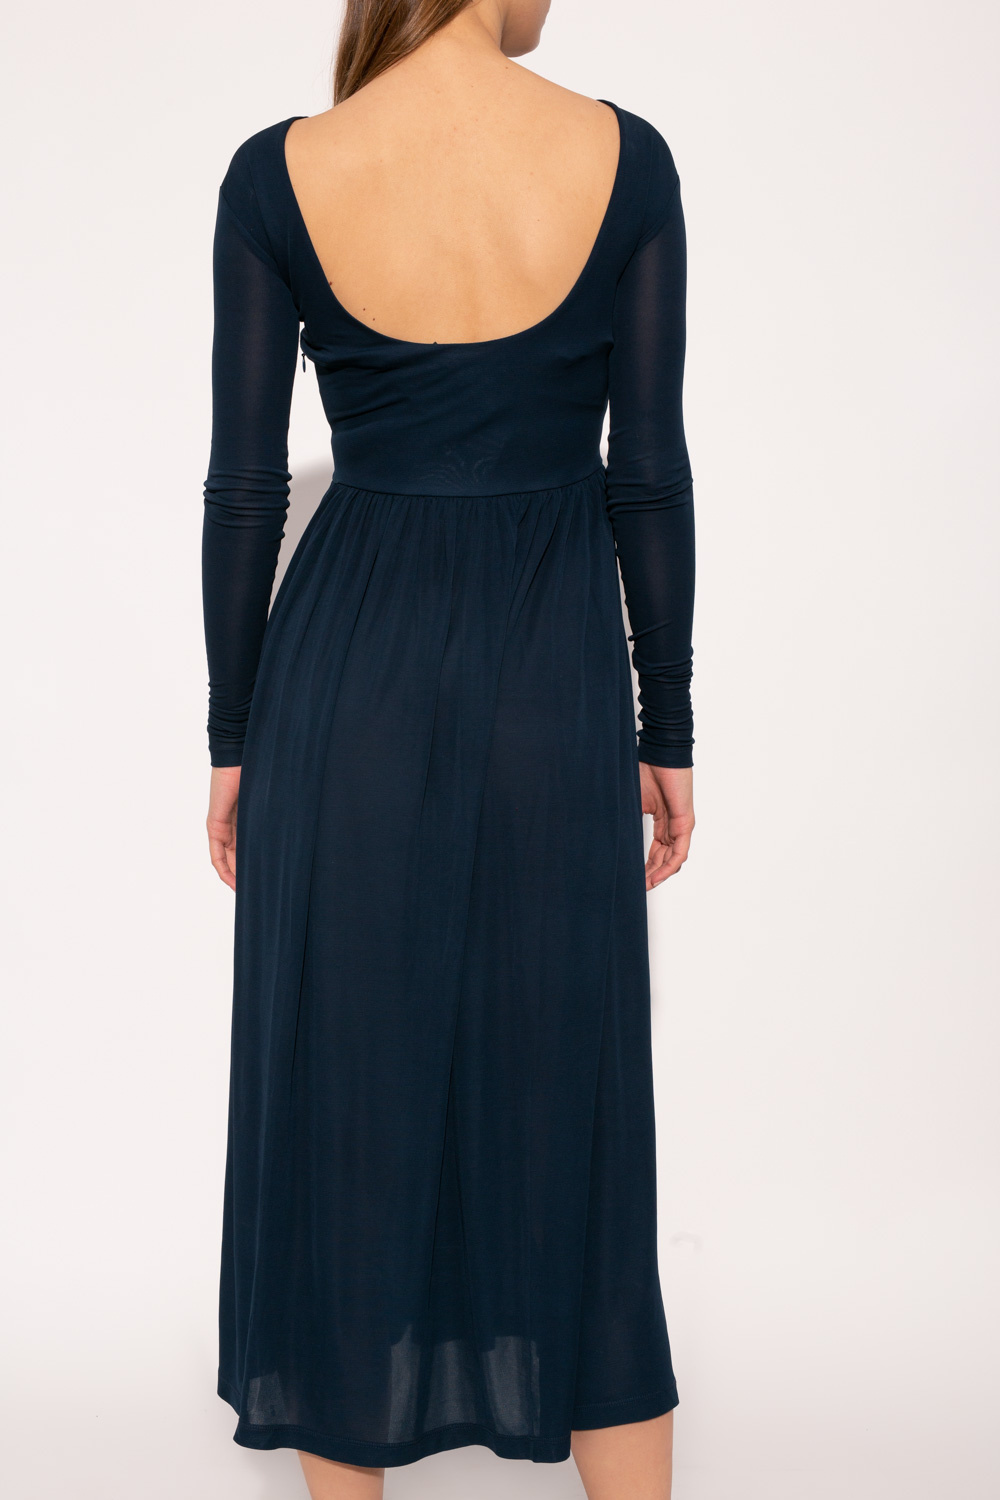 Aeron ‘Tribeca’ alissa dress with open back